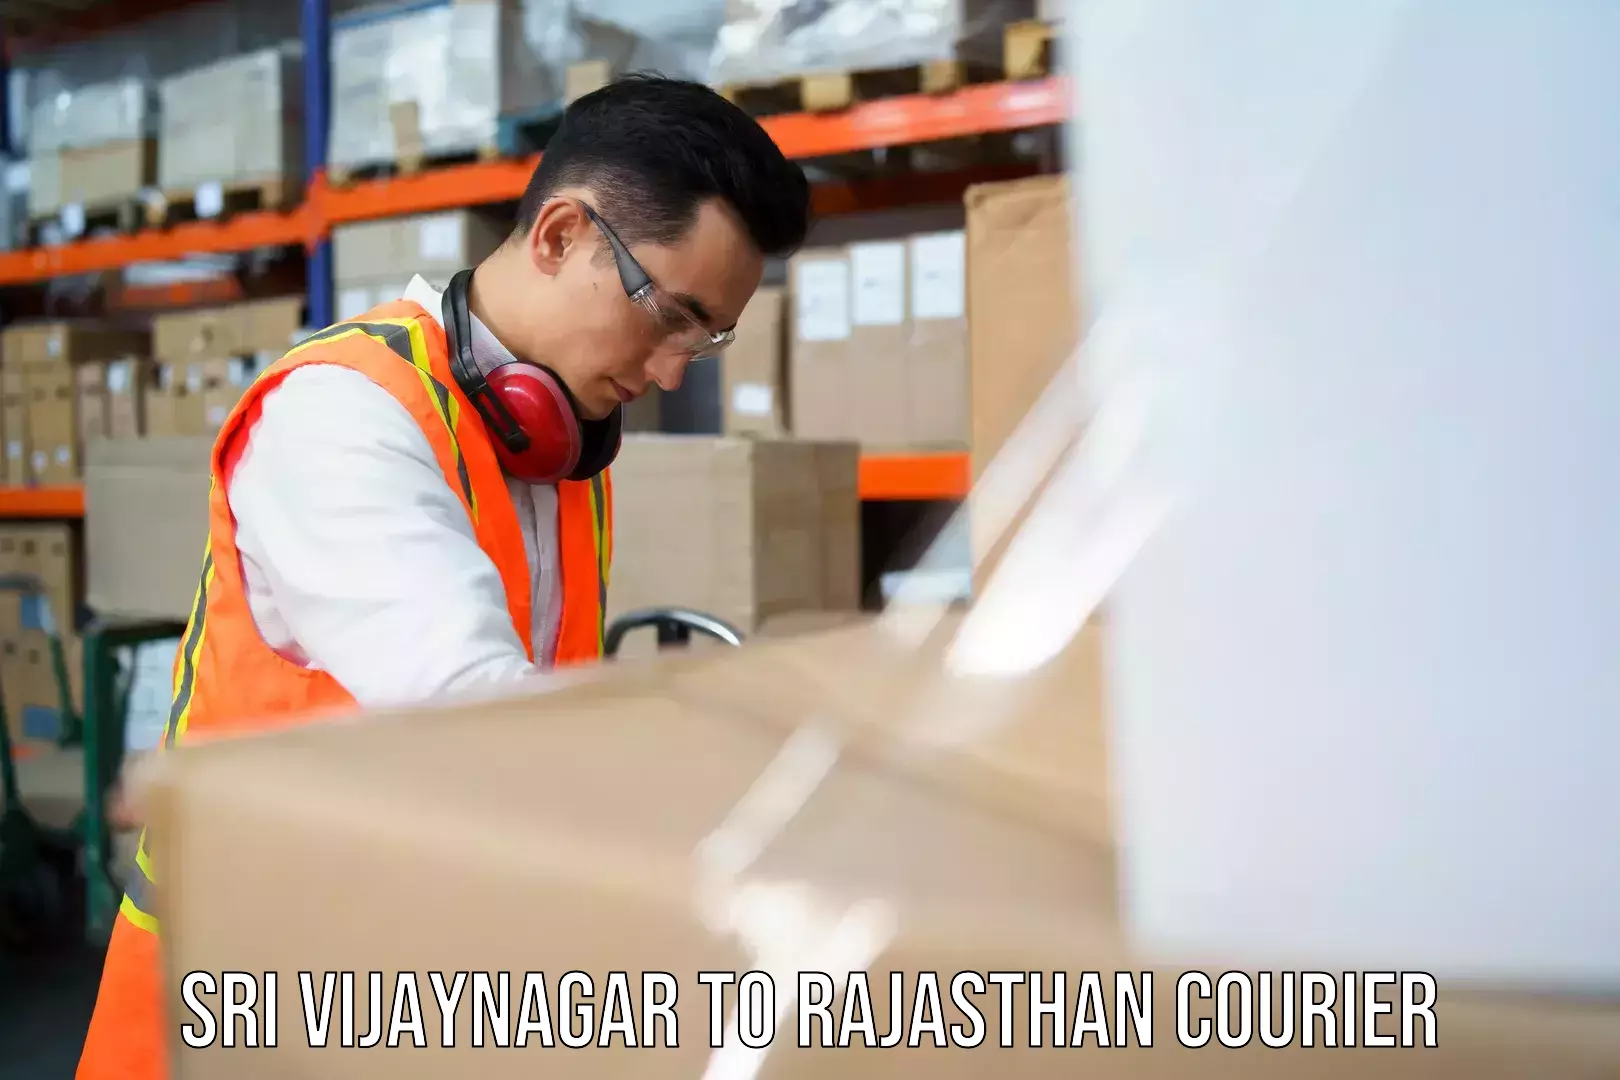 Professional courier handling Sri Vijaynagar to Bassi